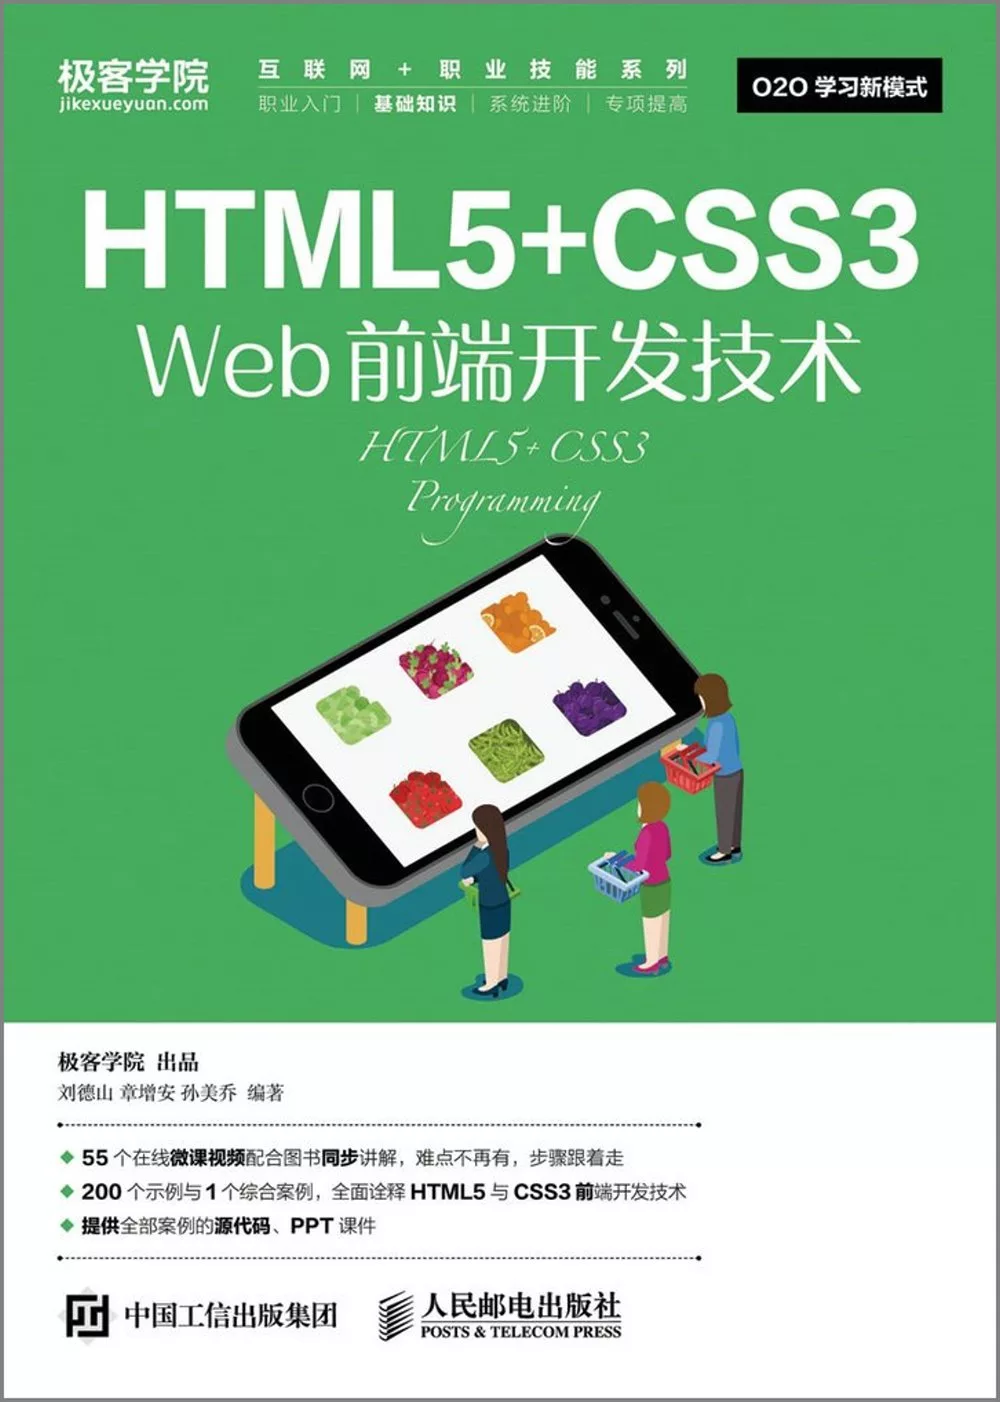 HTML5+CSS3 Web前端開發技術